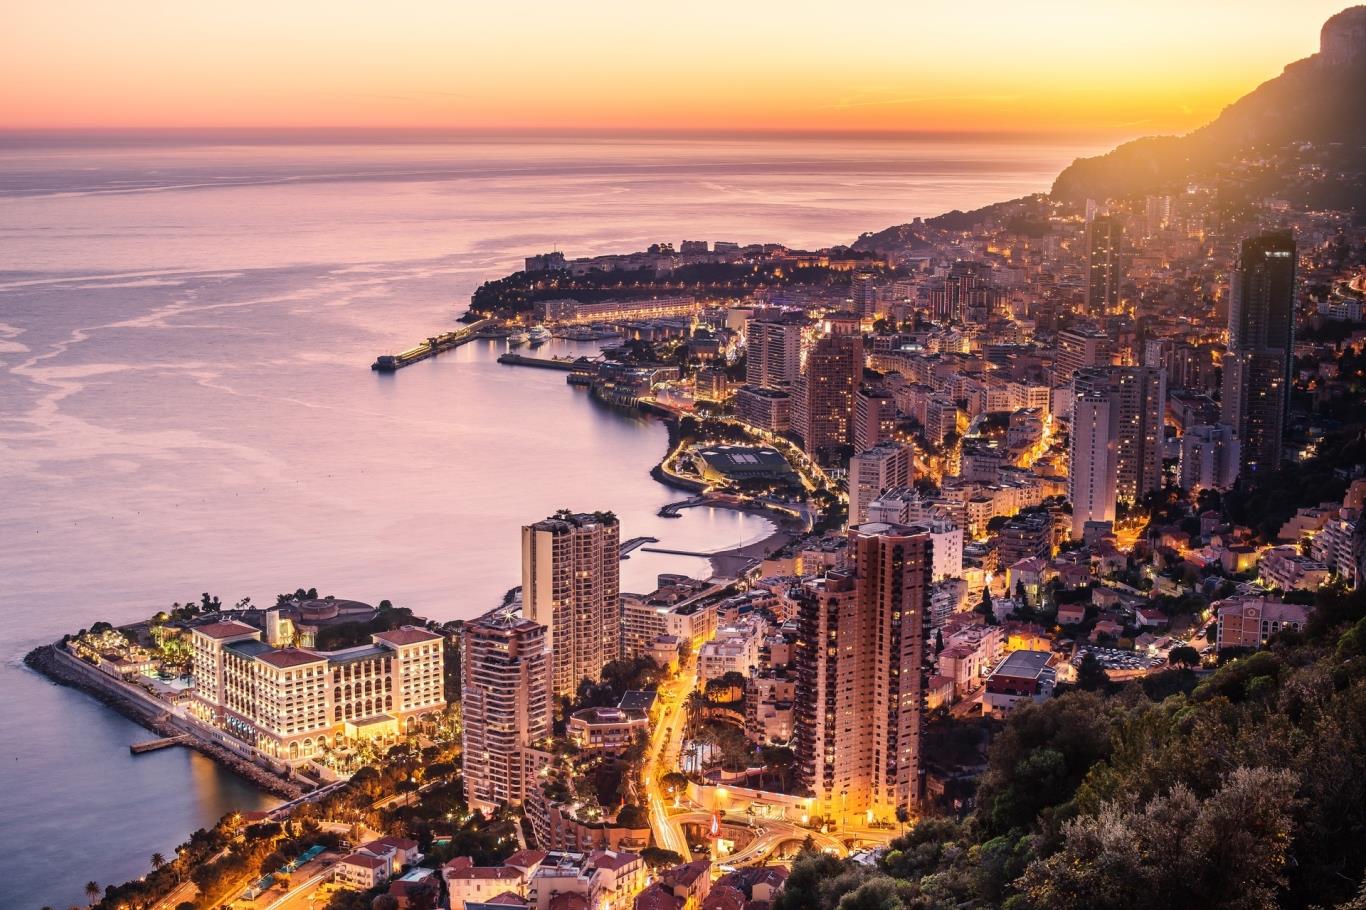 Tour du lịch Monaco - Thời tiết ở Monaco